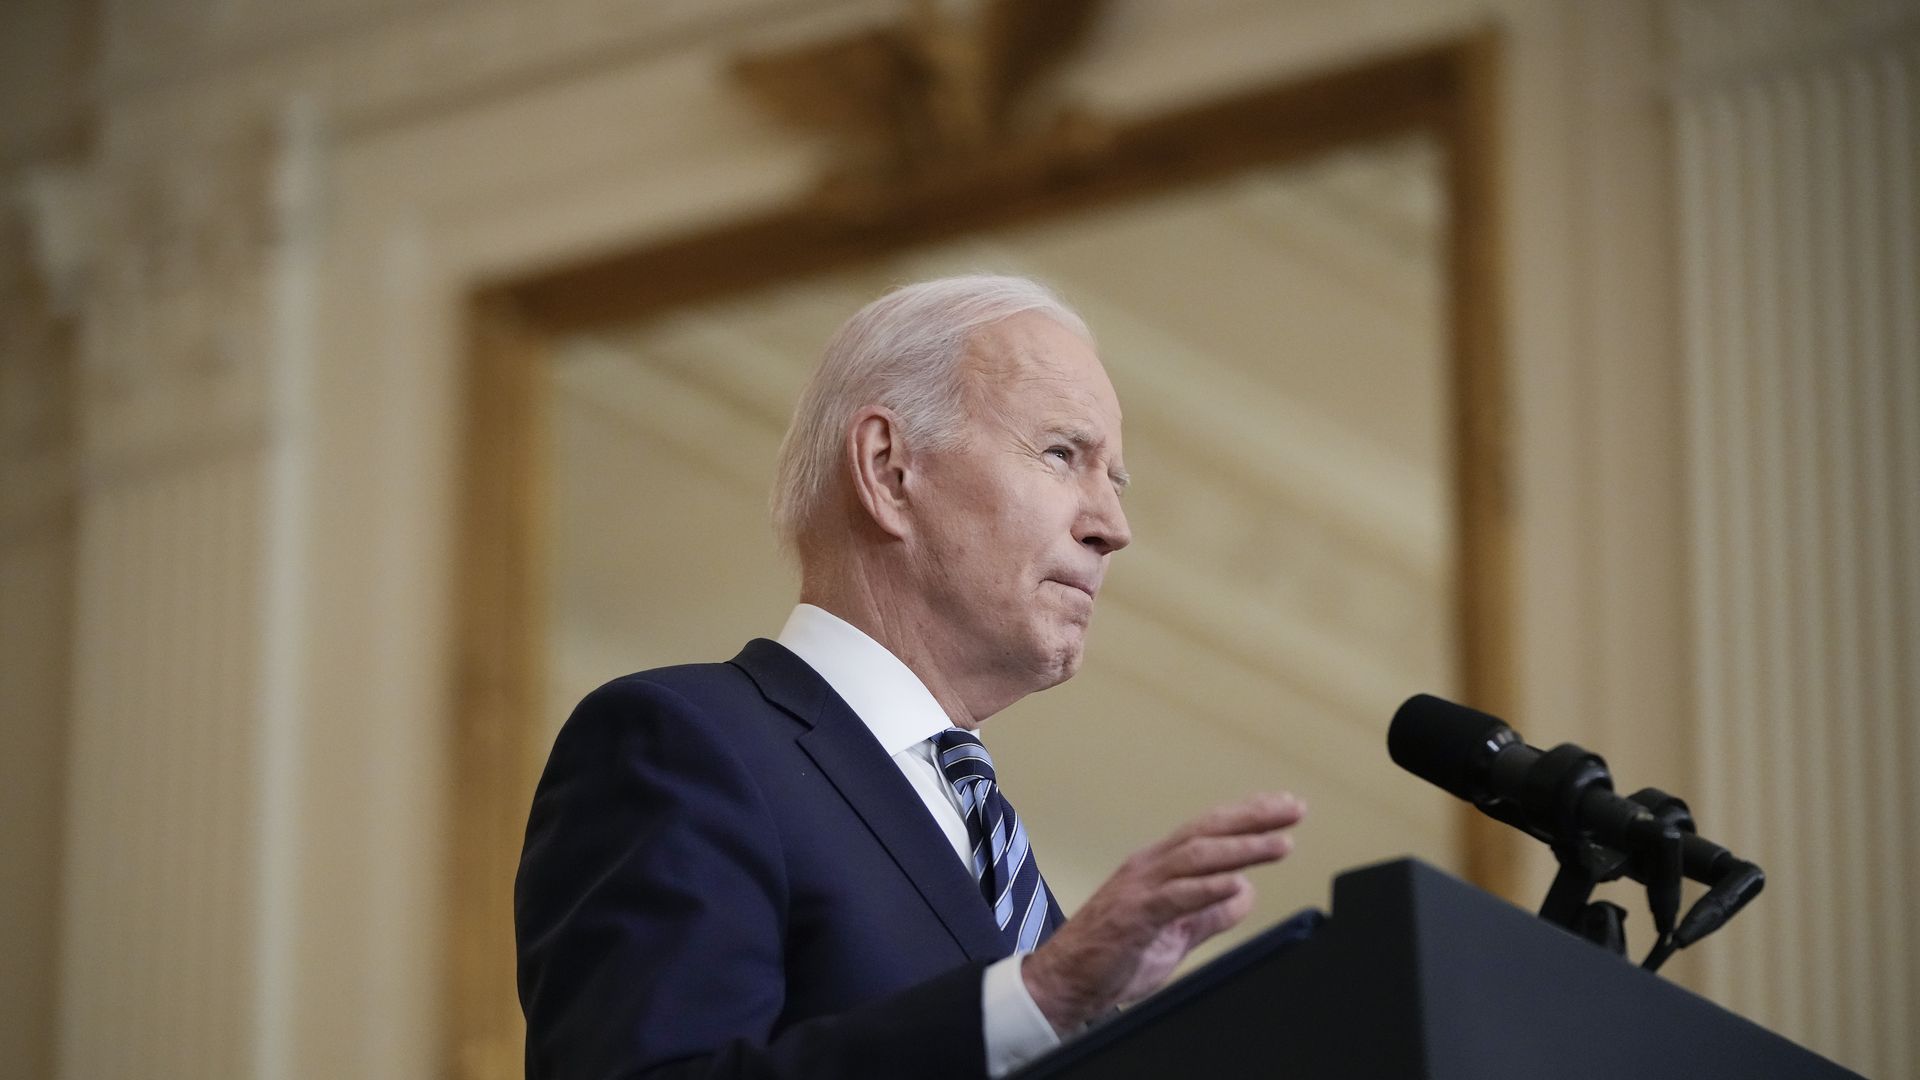 Photo of Joe Biden speaking from a podium